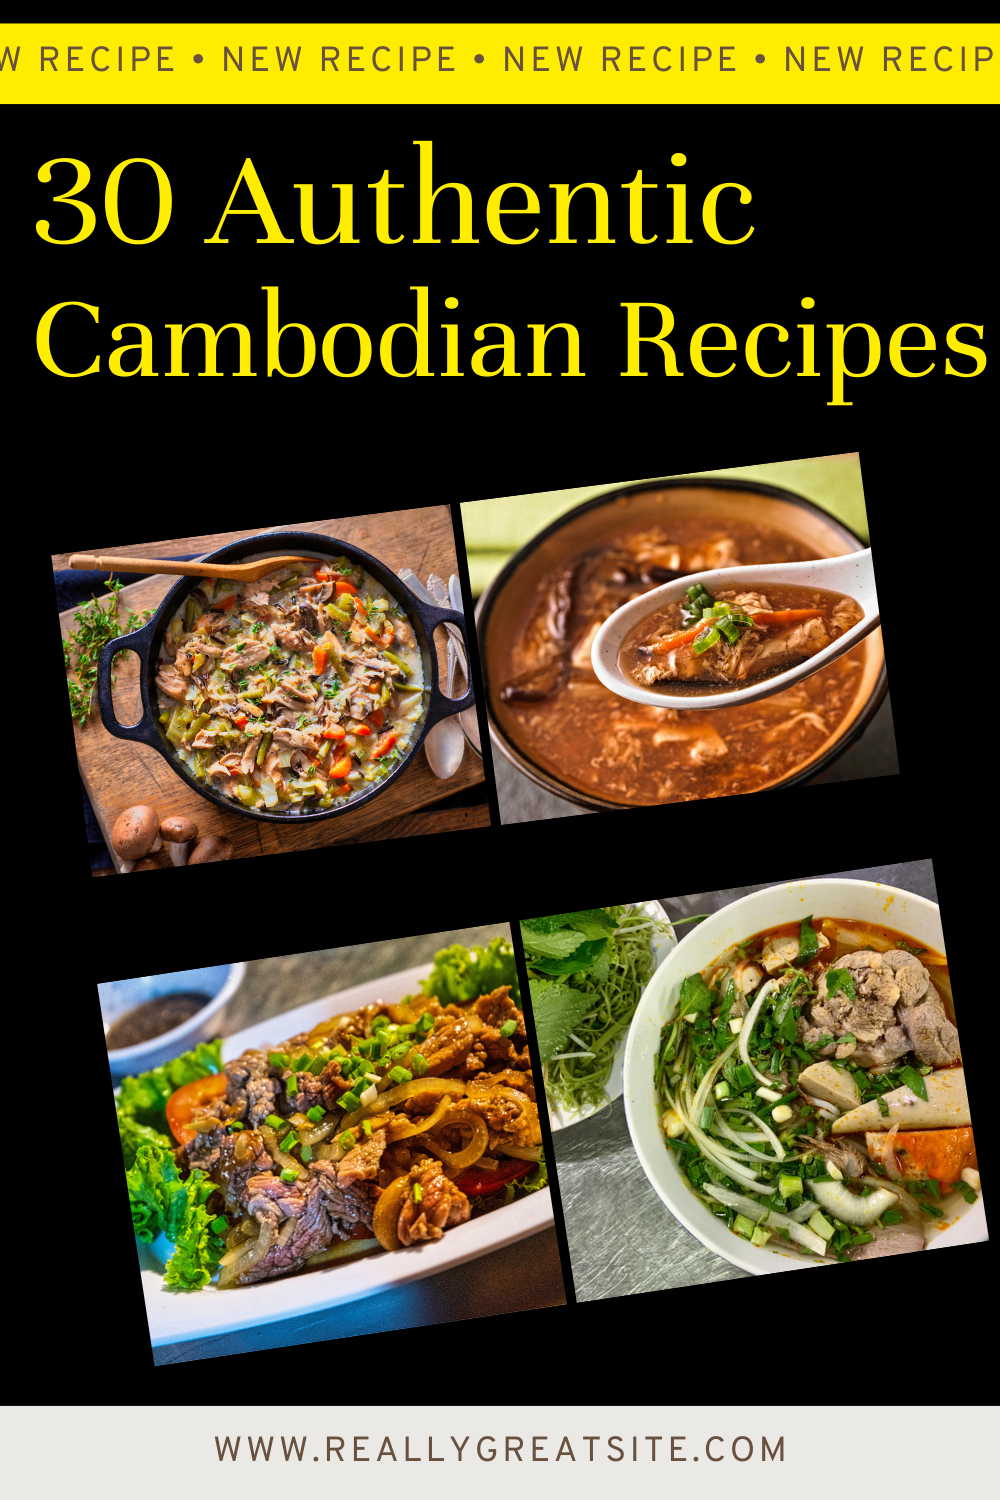 Cambodia Food Image Collage